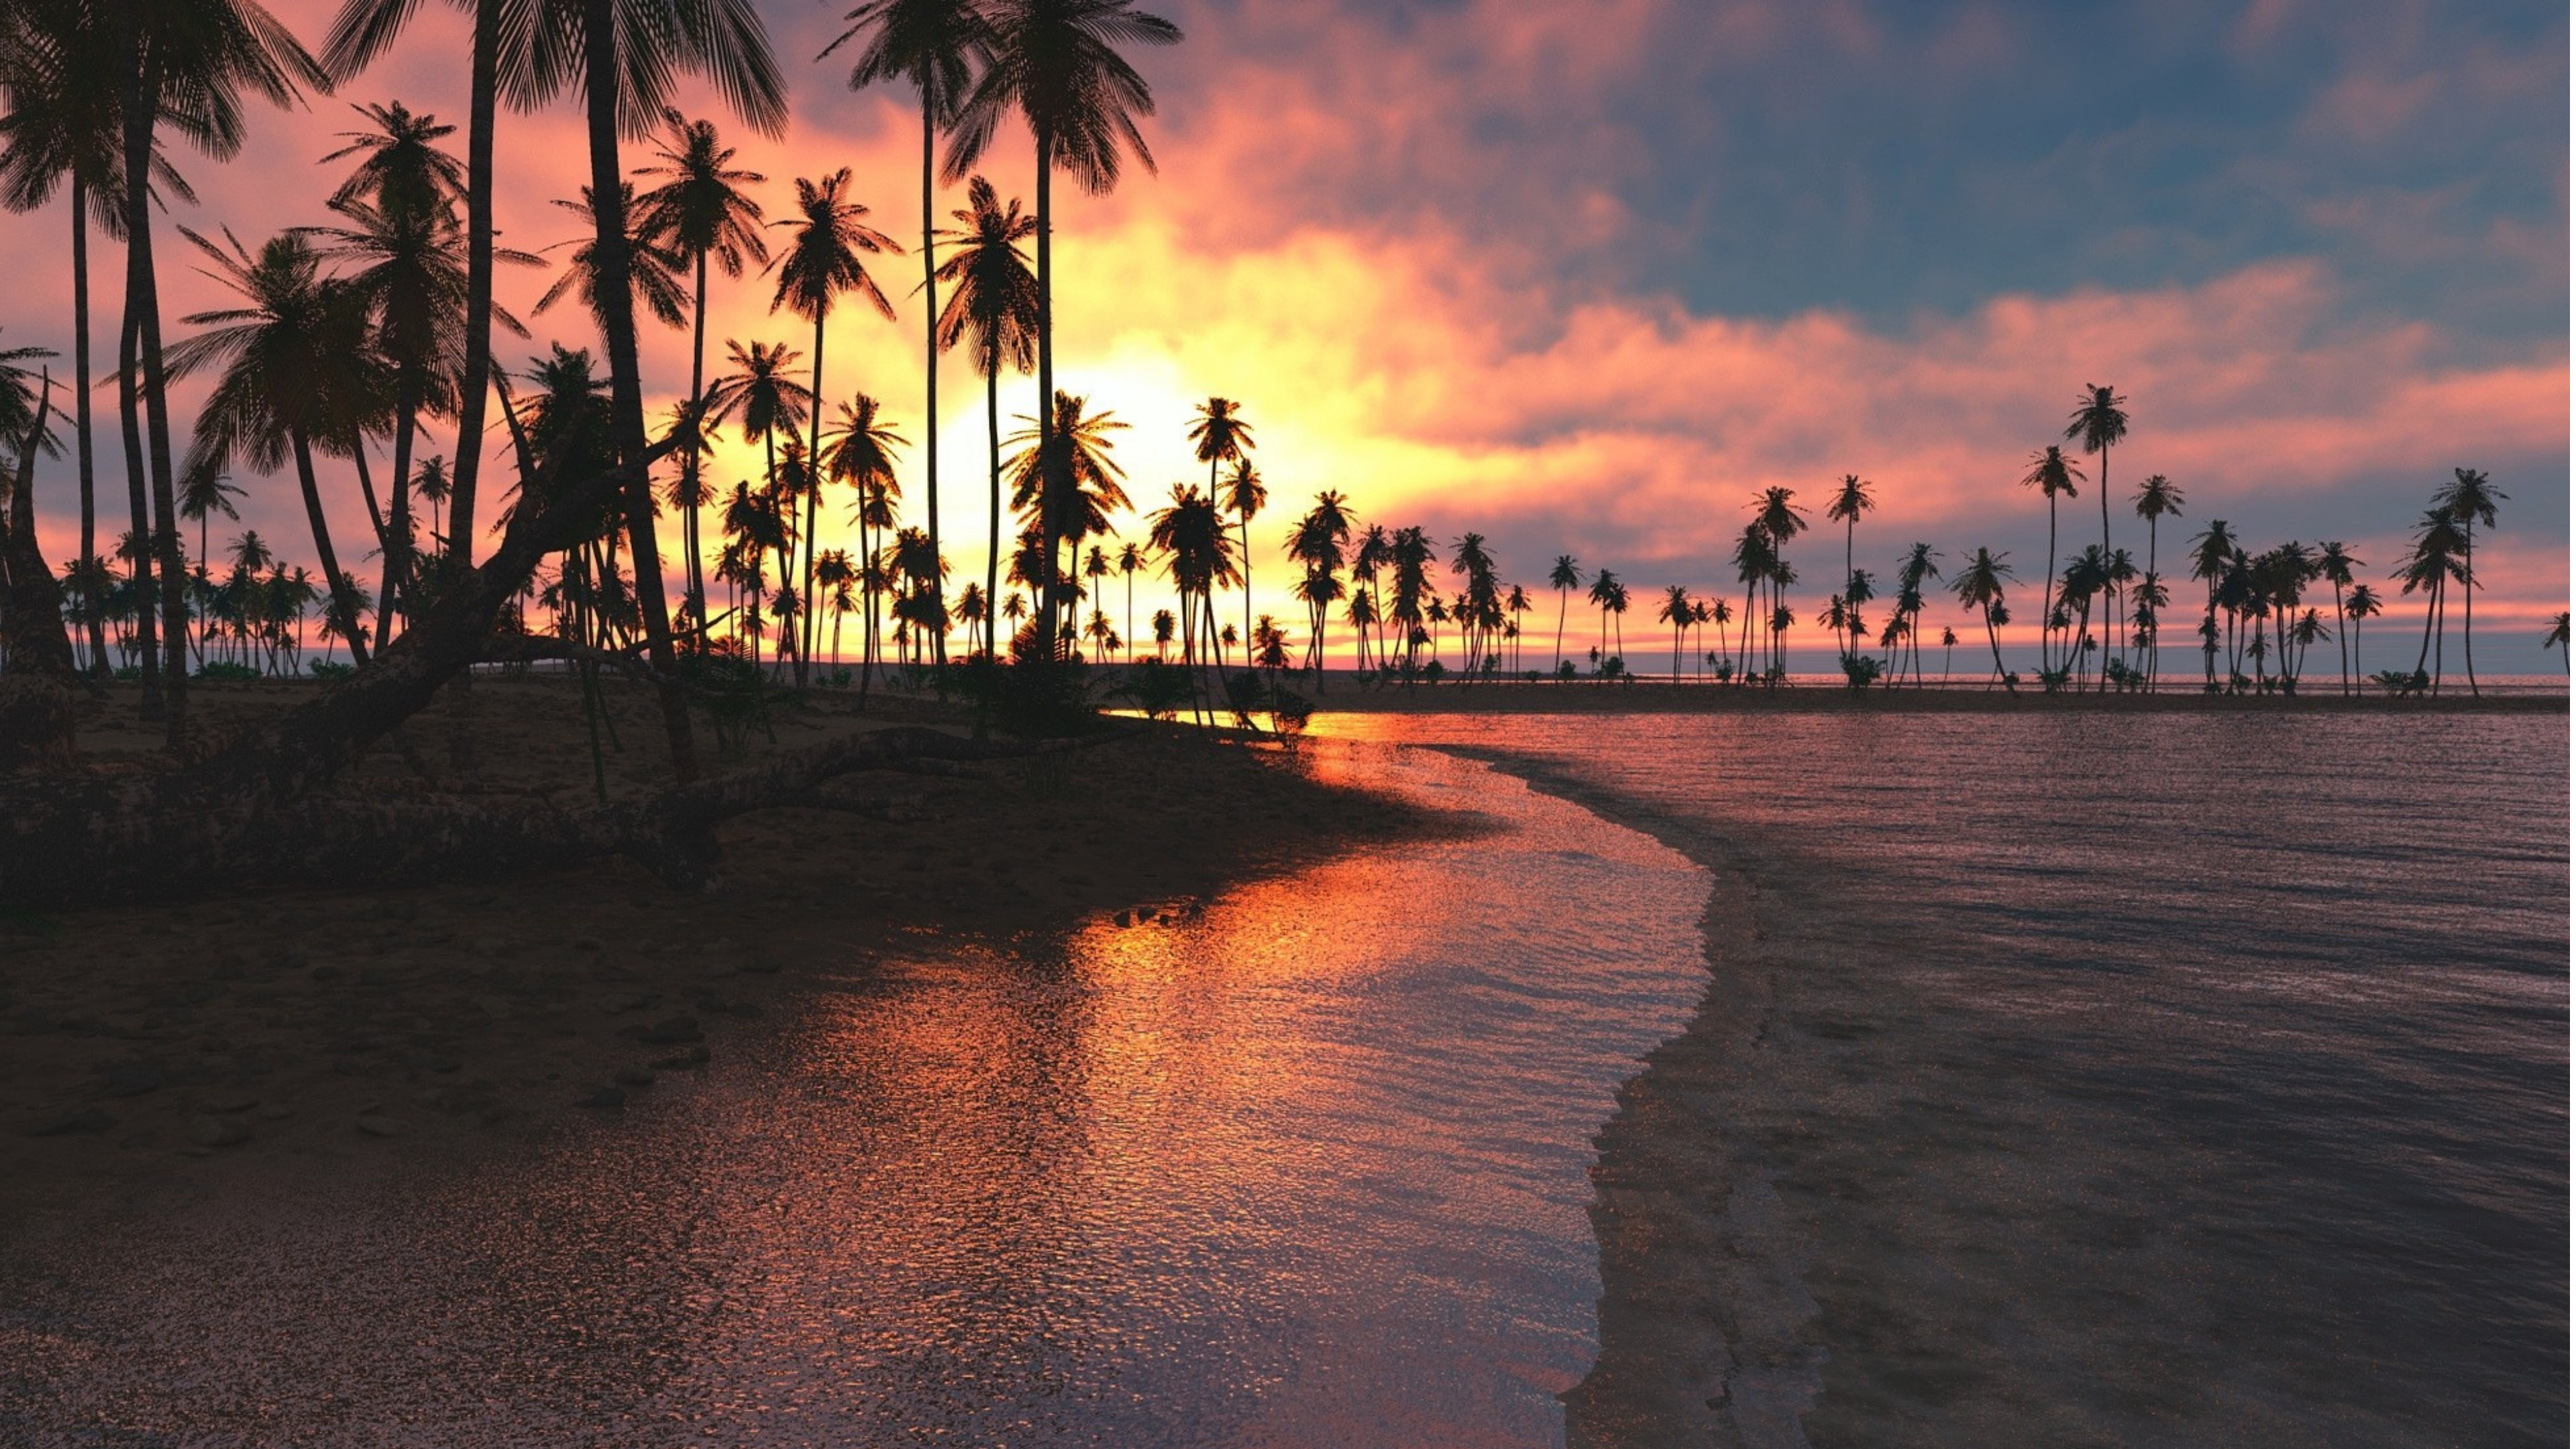 3840x2160 Palm trees augment the beauty of sunset! [38402160] | Tree desktop wallpaper, Beach wallpaper, Landscape